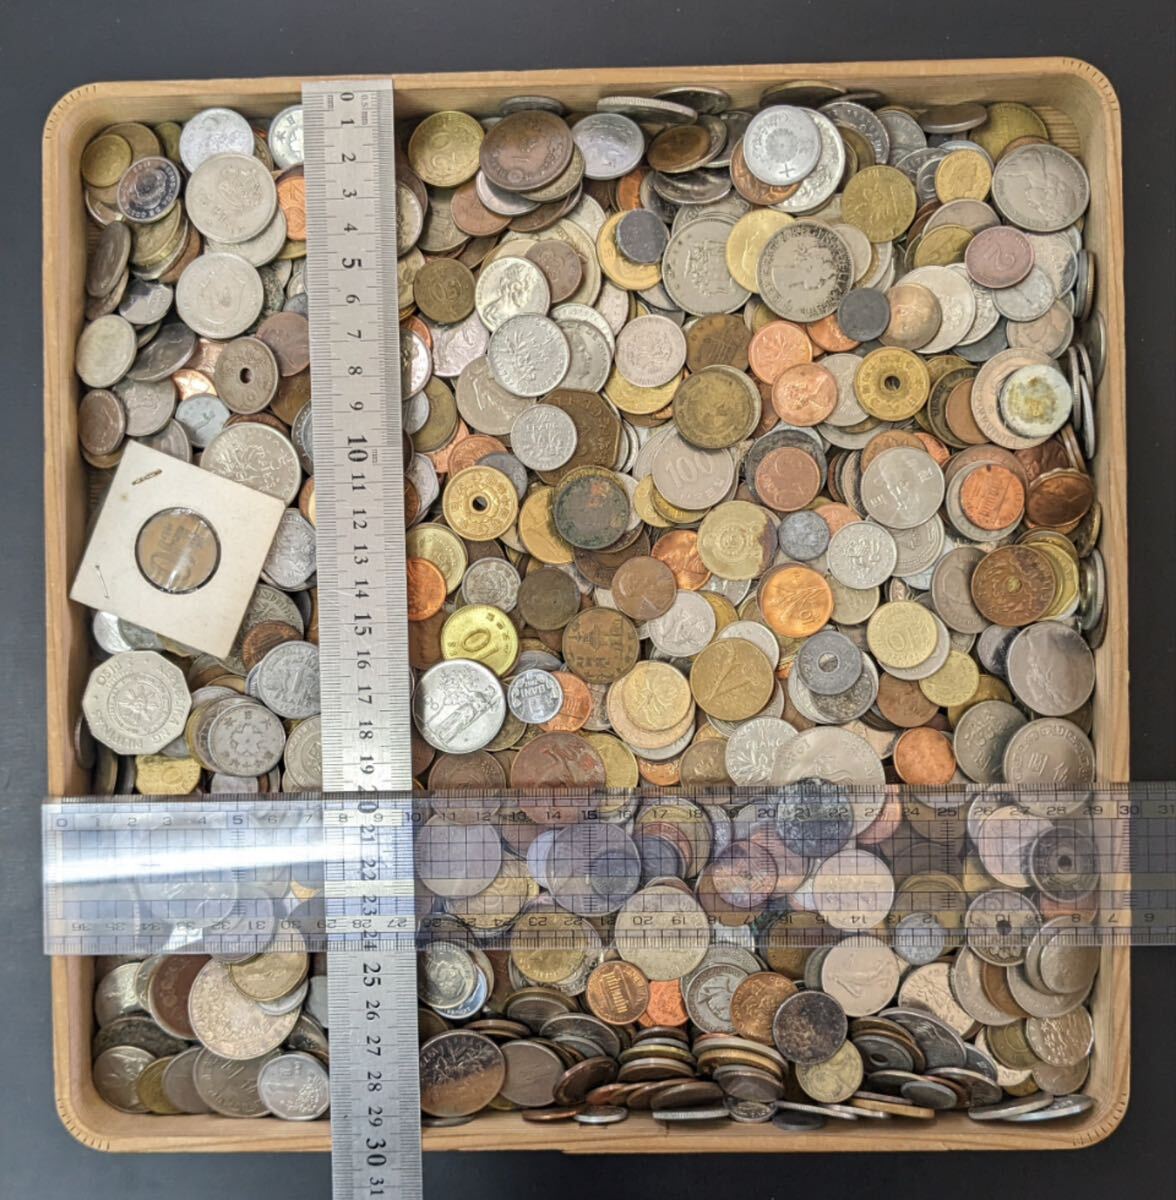 S4240 古美術 古銭 硬貨 硬幣 貨幣 外国銭 世界コイン 大量まとめ 総重量約5.00kg アンティークの画像2